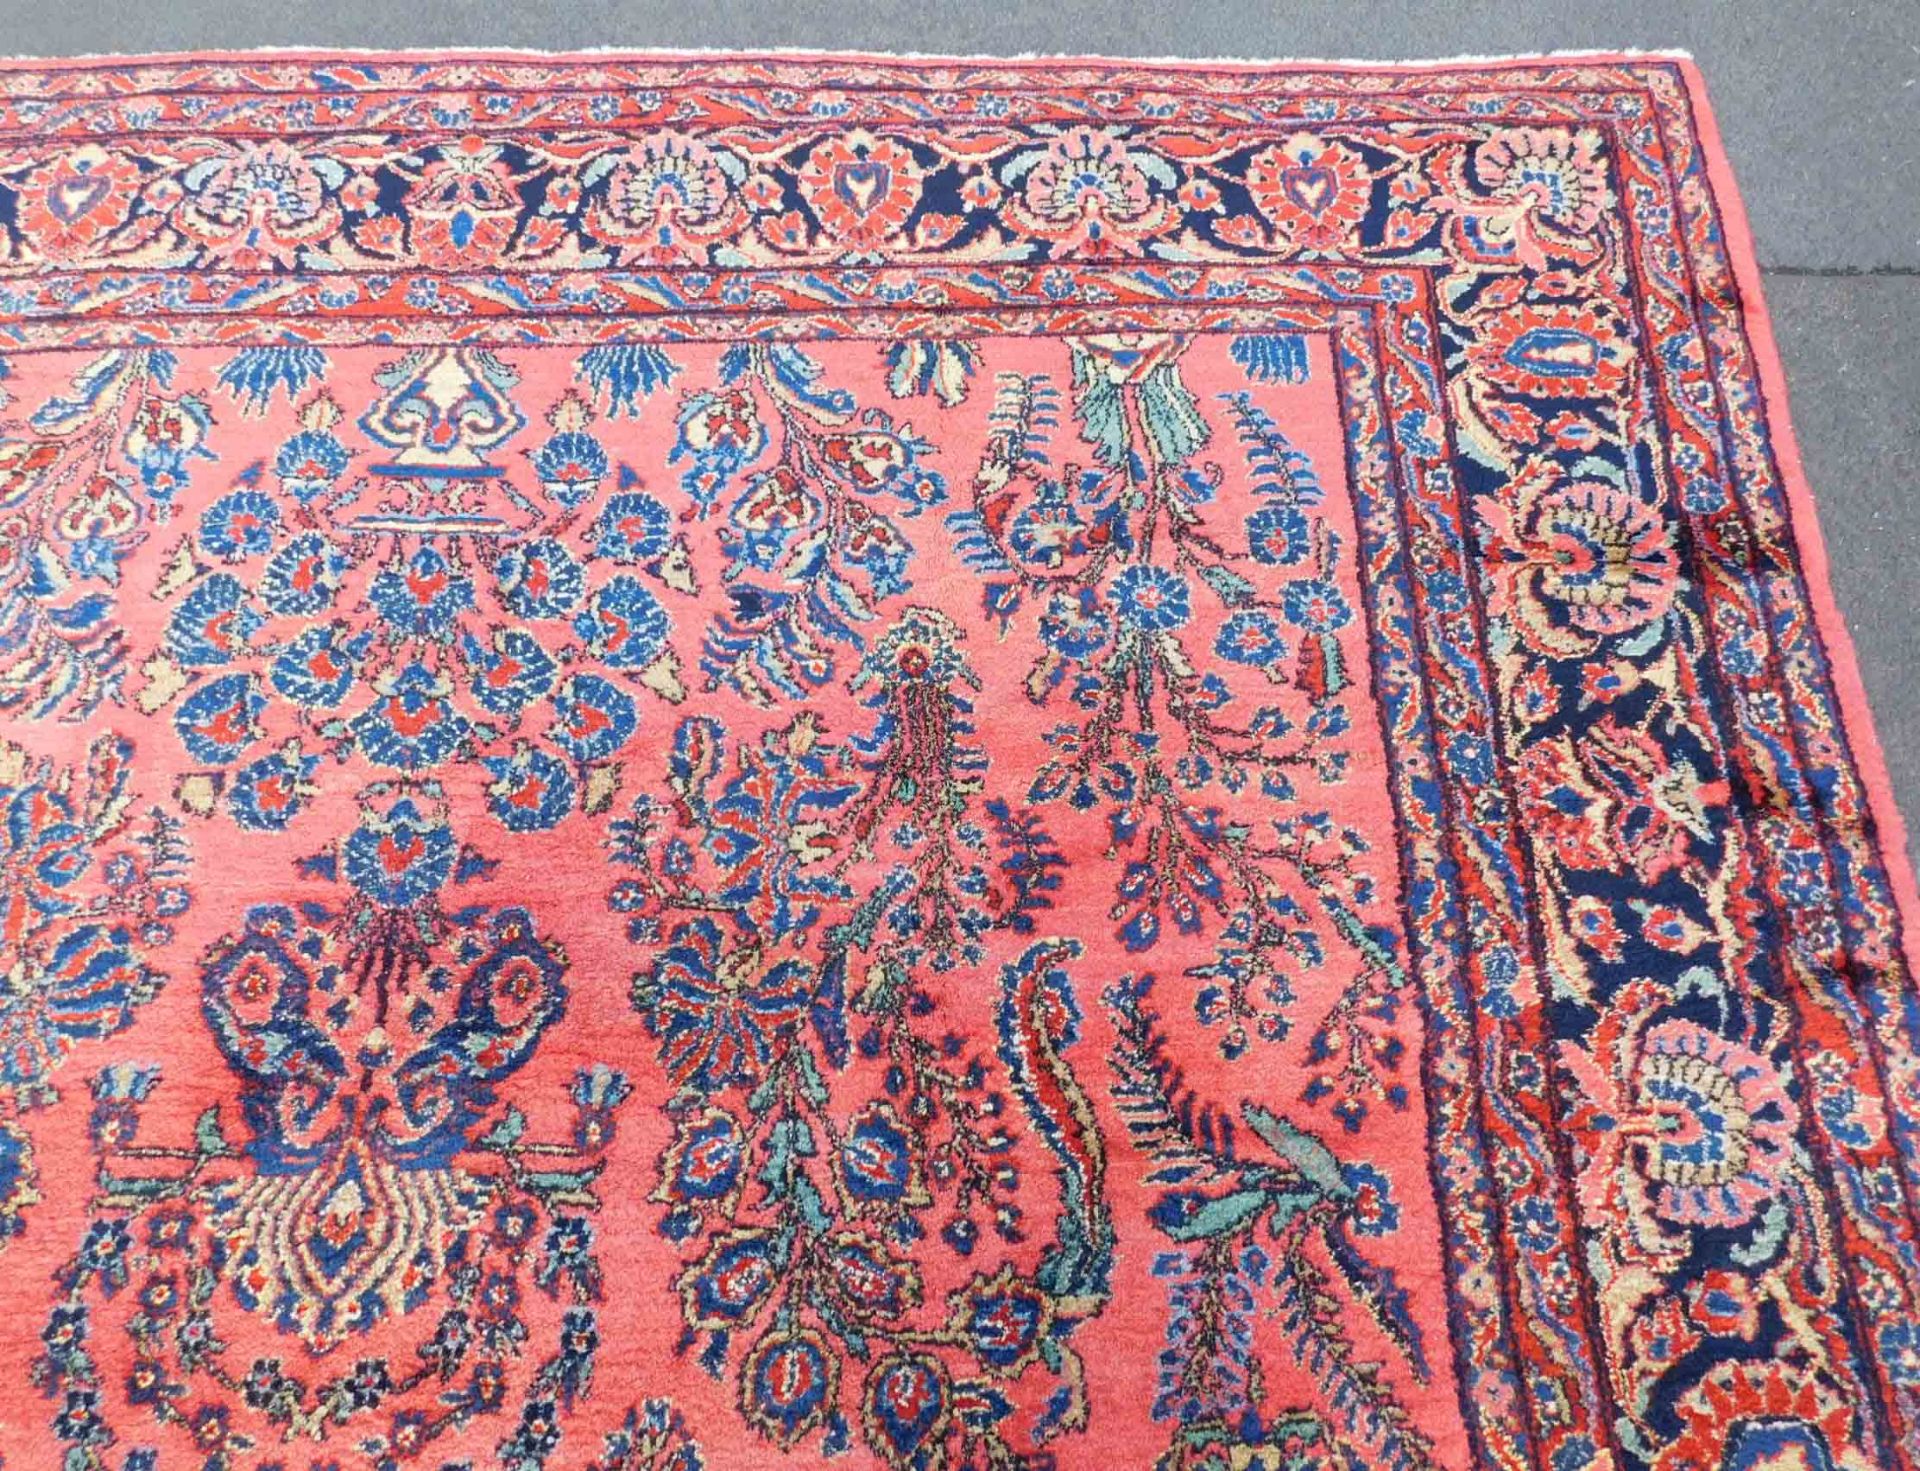 Saruk Persian carpet. "American Saruk". Iran. Around 100 years old. - Image 5 of 8